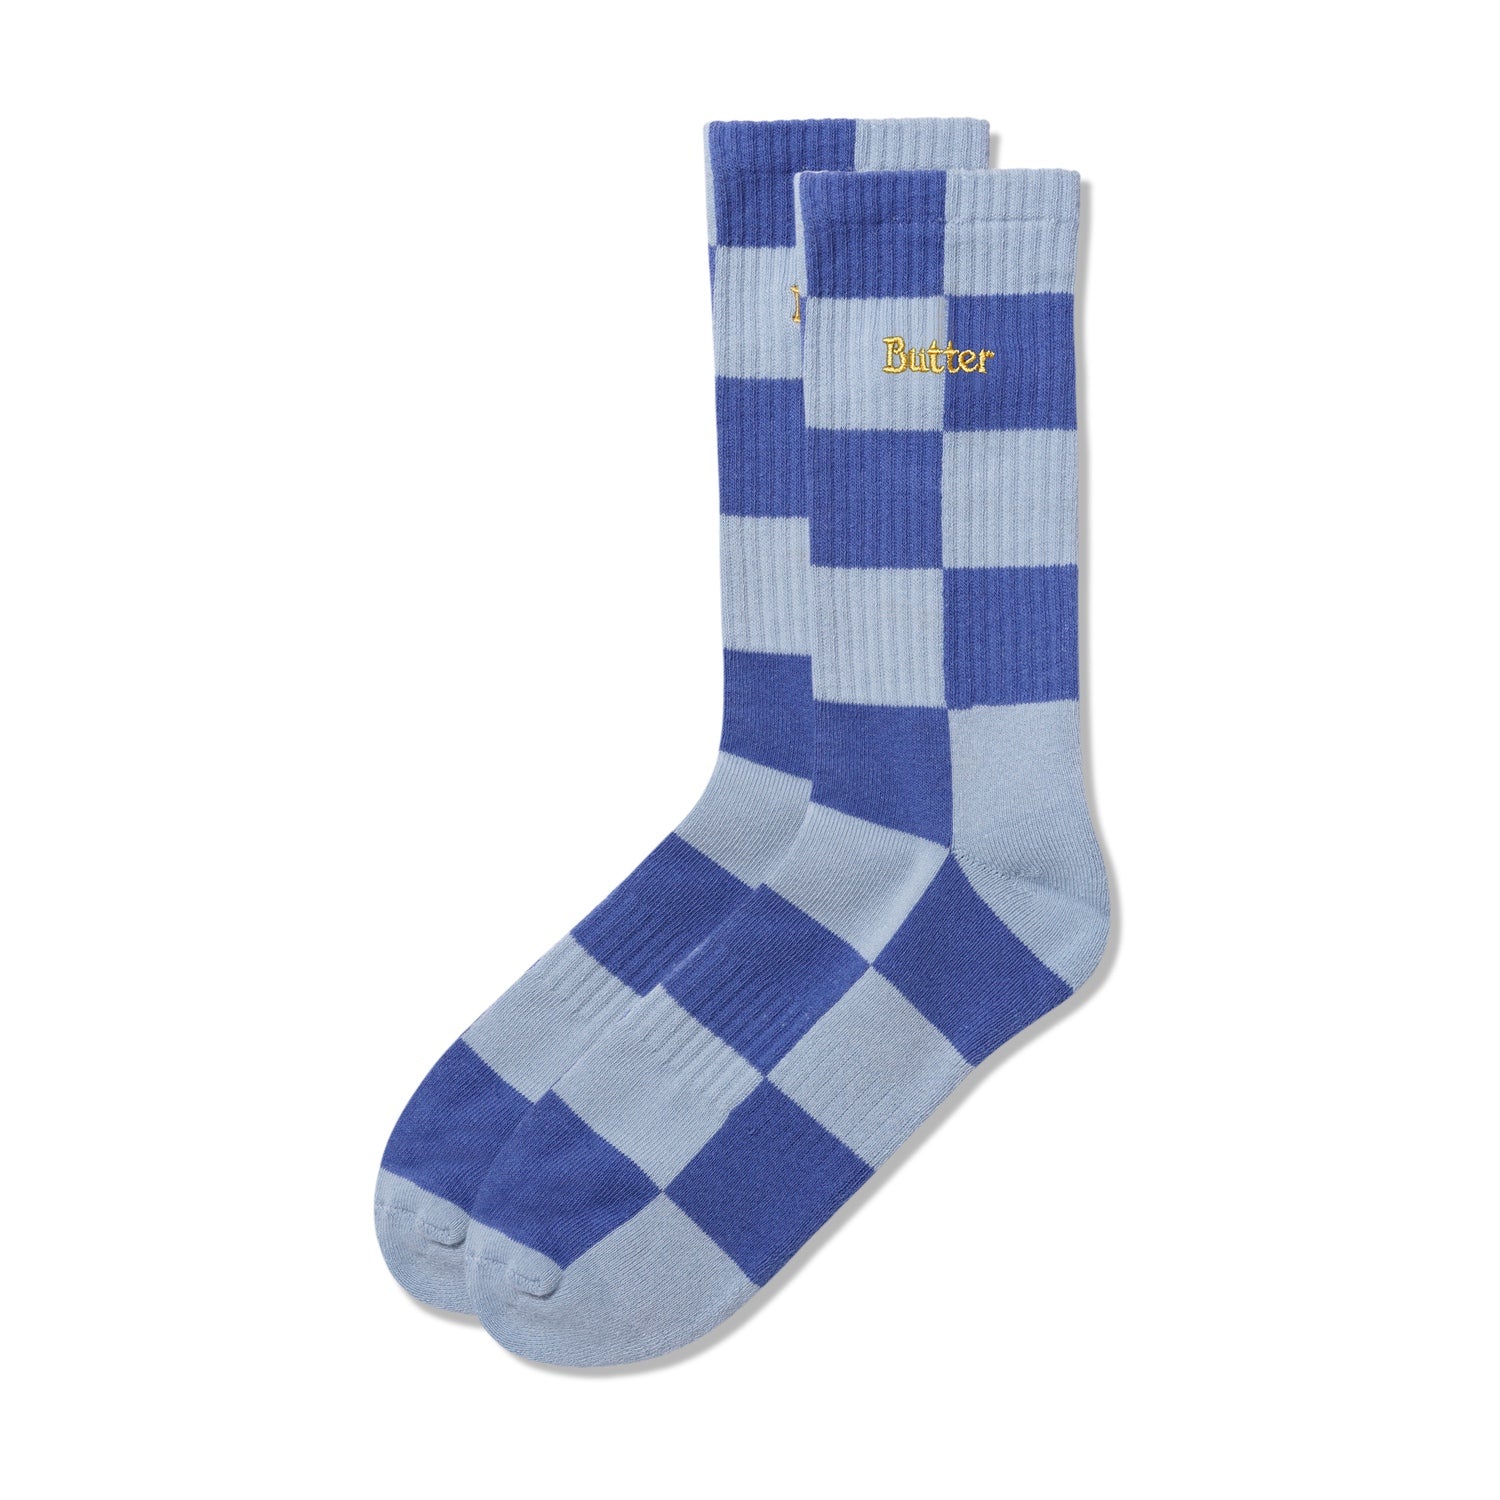 Checkered Sock - Powder Blue/Slate